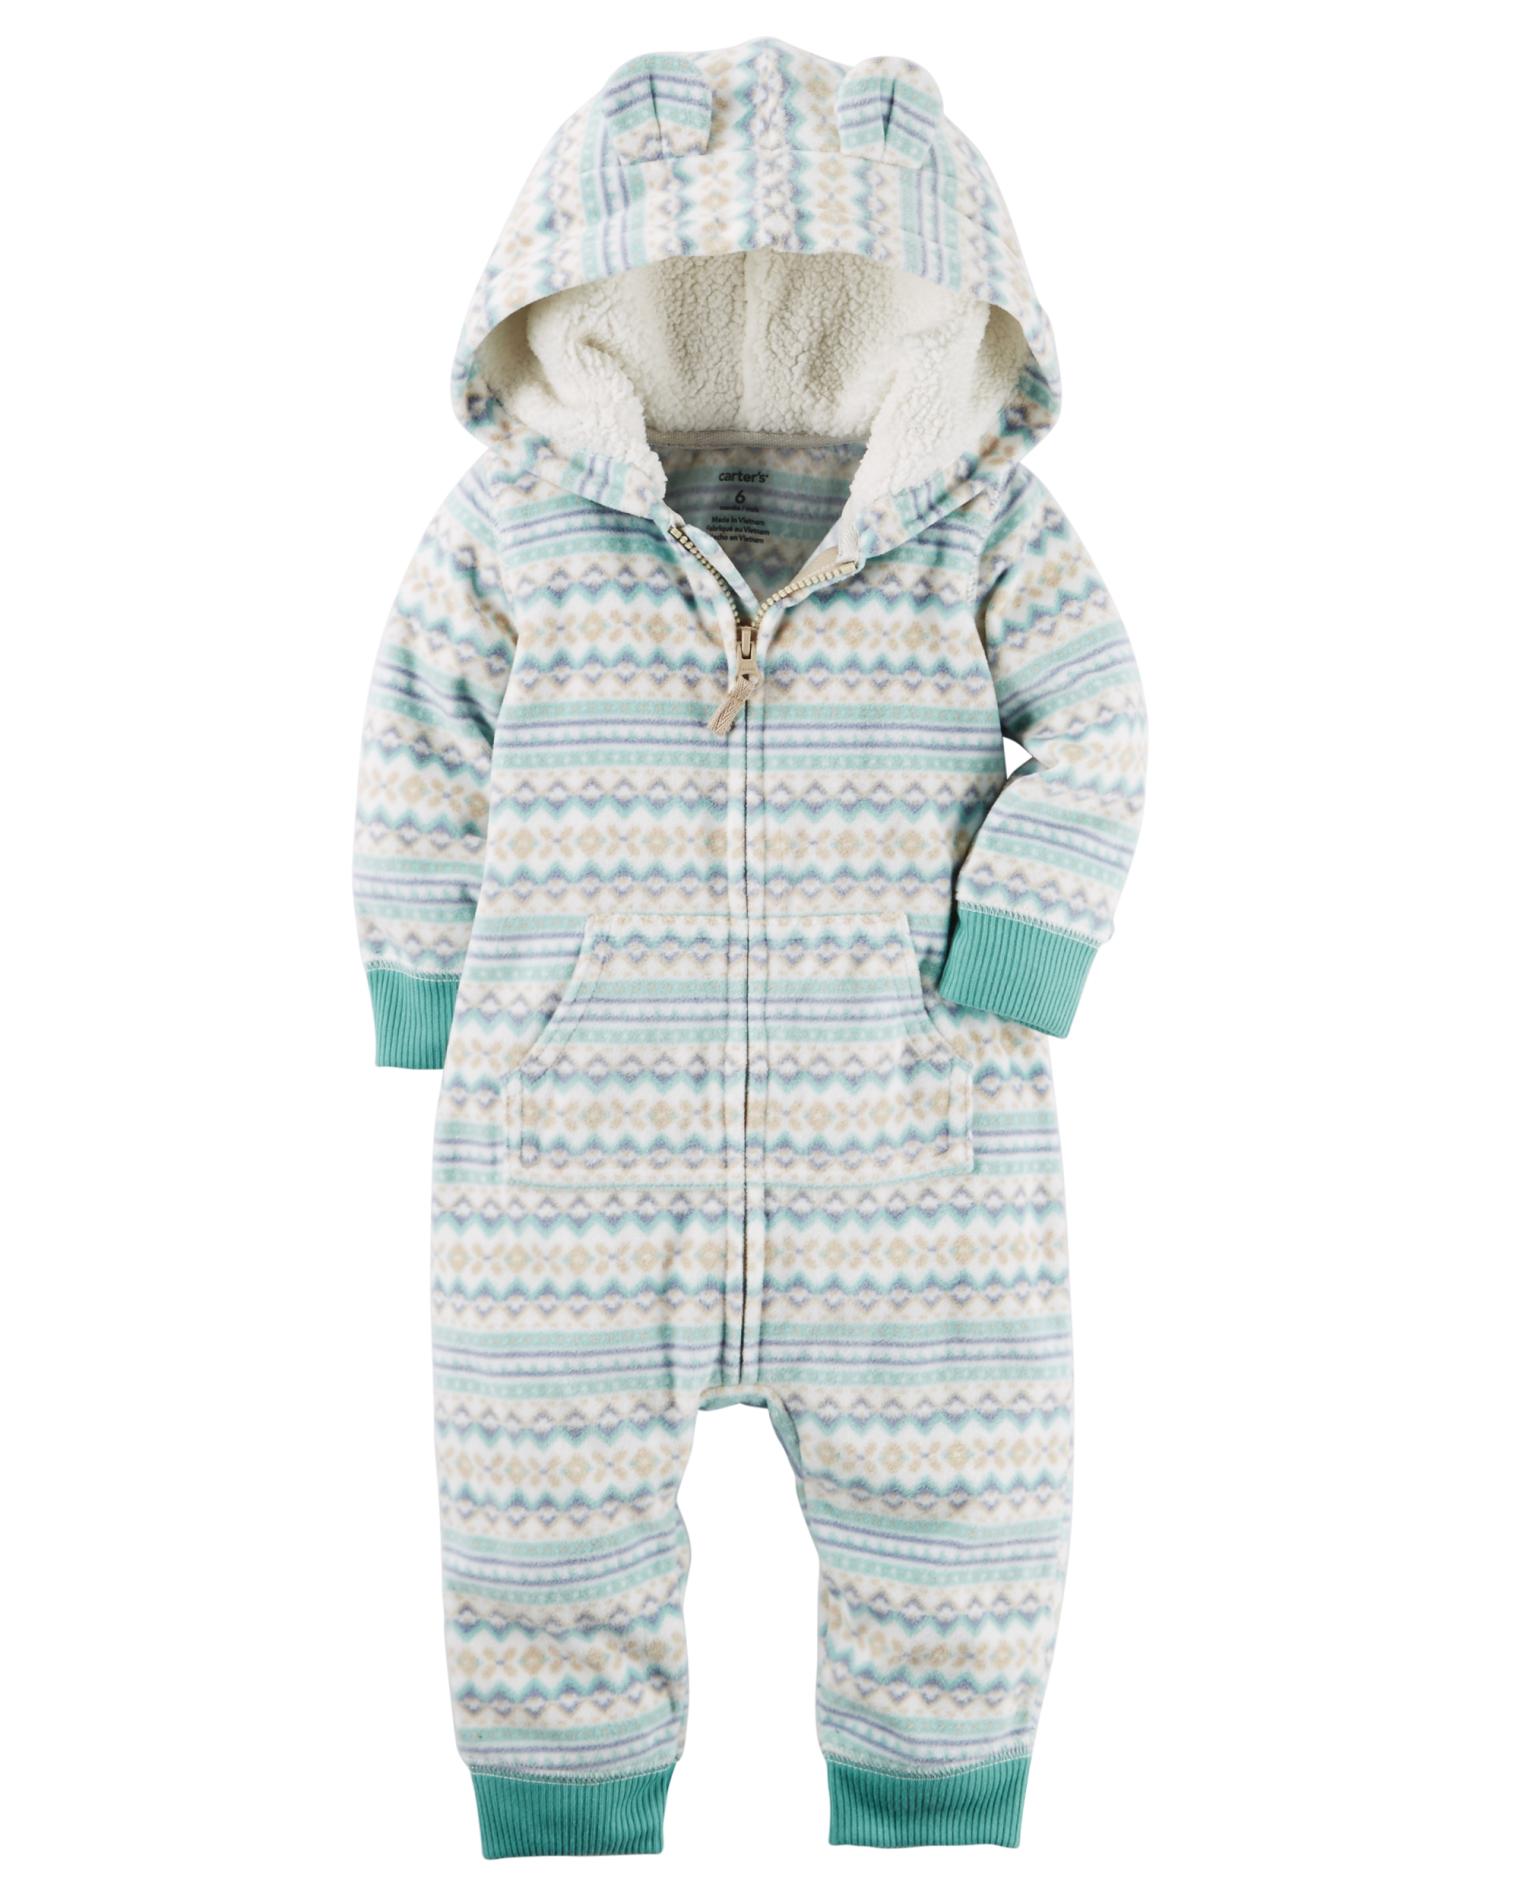 Carter's Newborn & Infant Boys' Hooded Fleece Jumpsuit - Striped